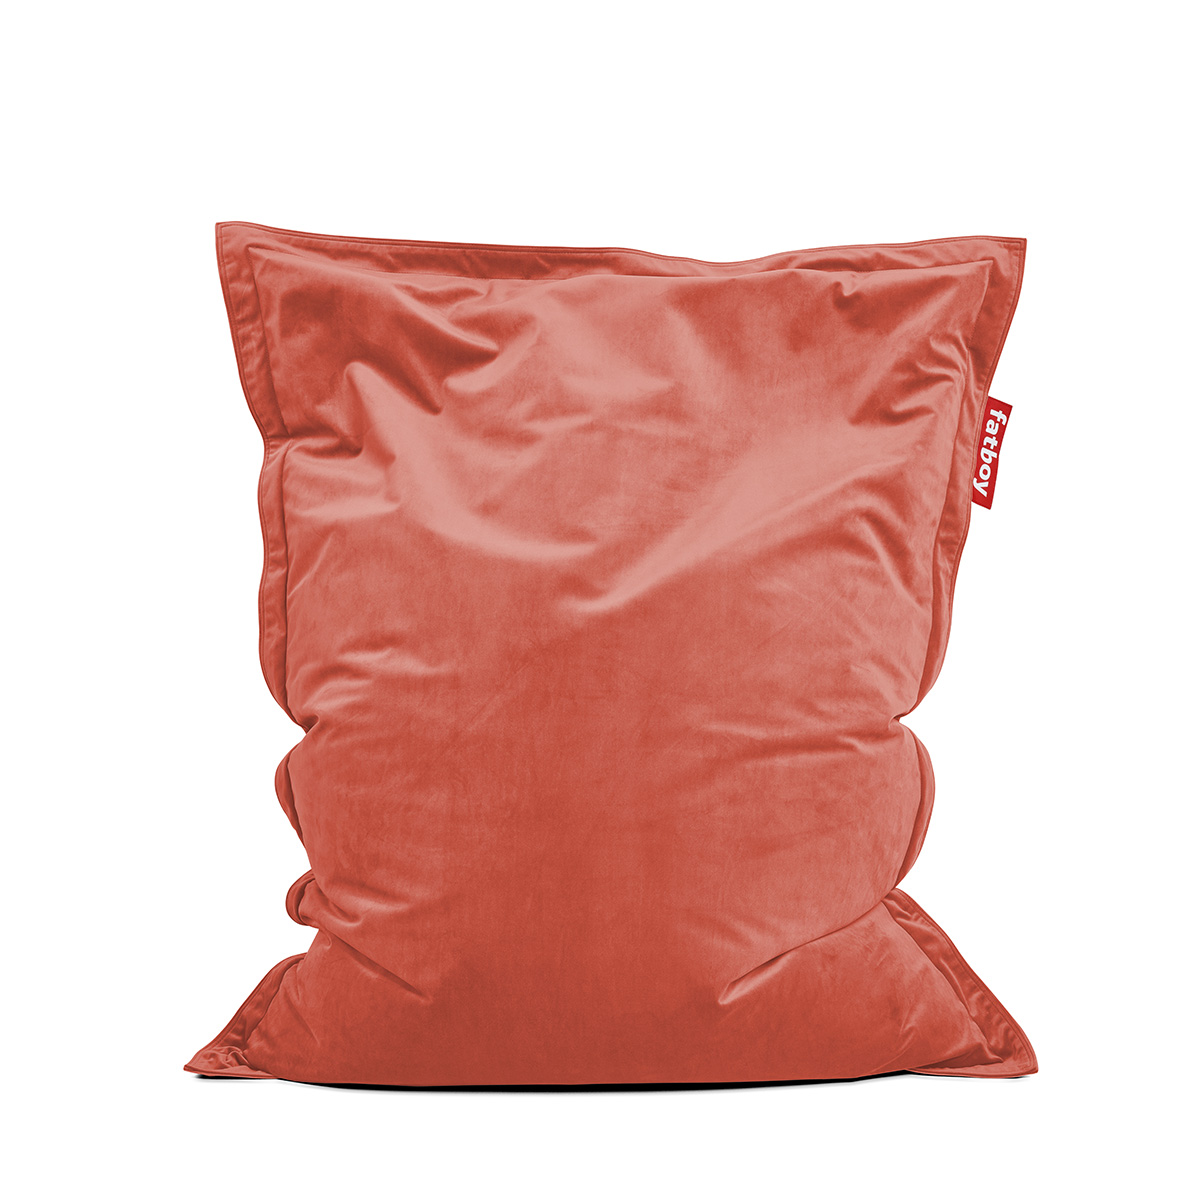 Lazy bag original slim velvet 104802 